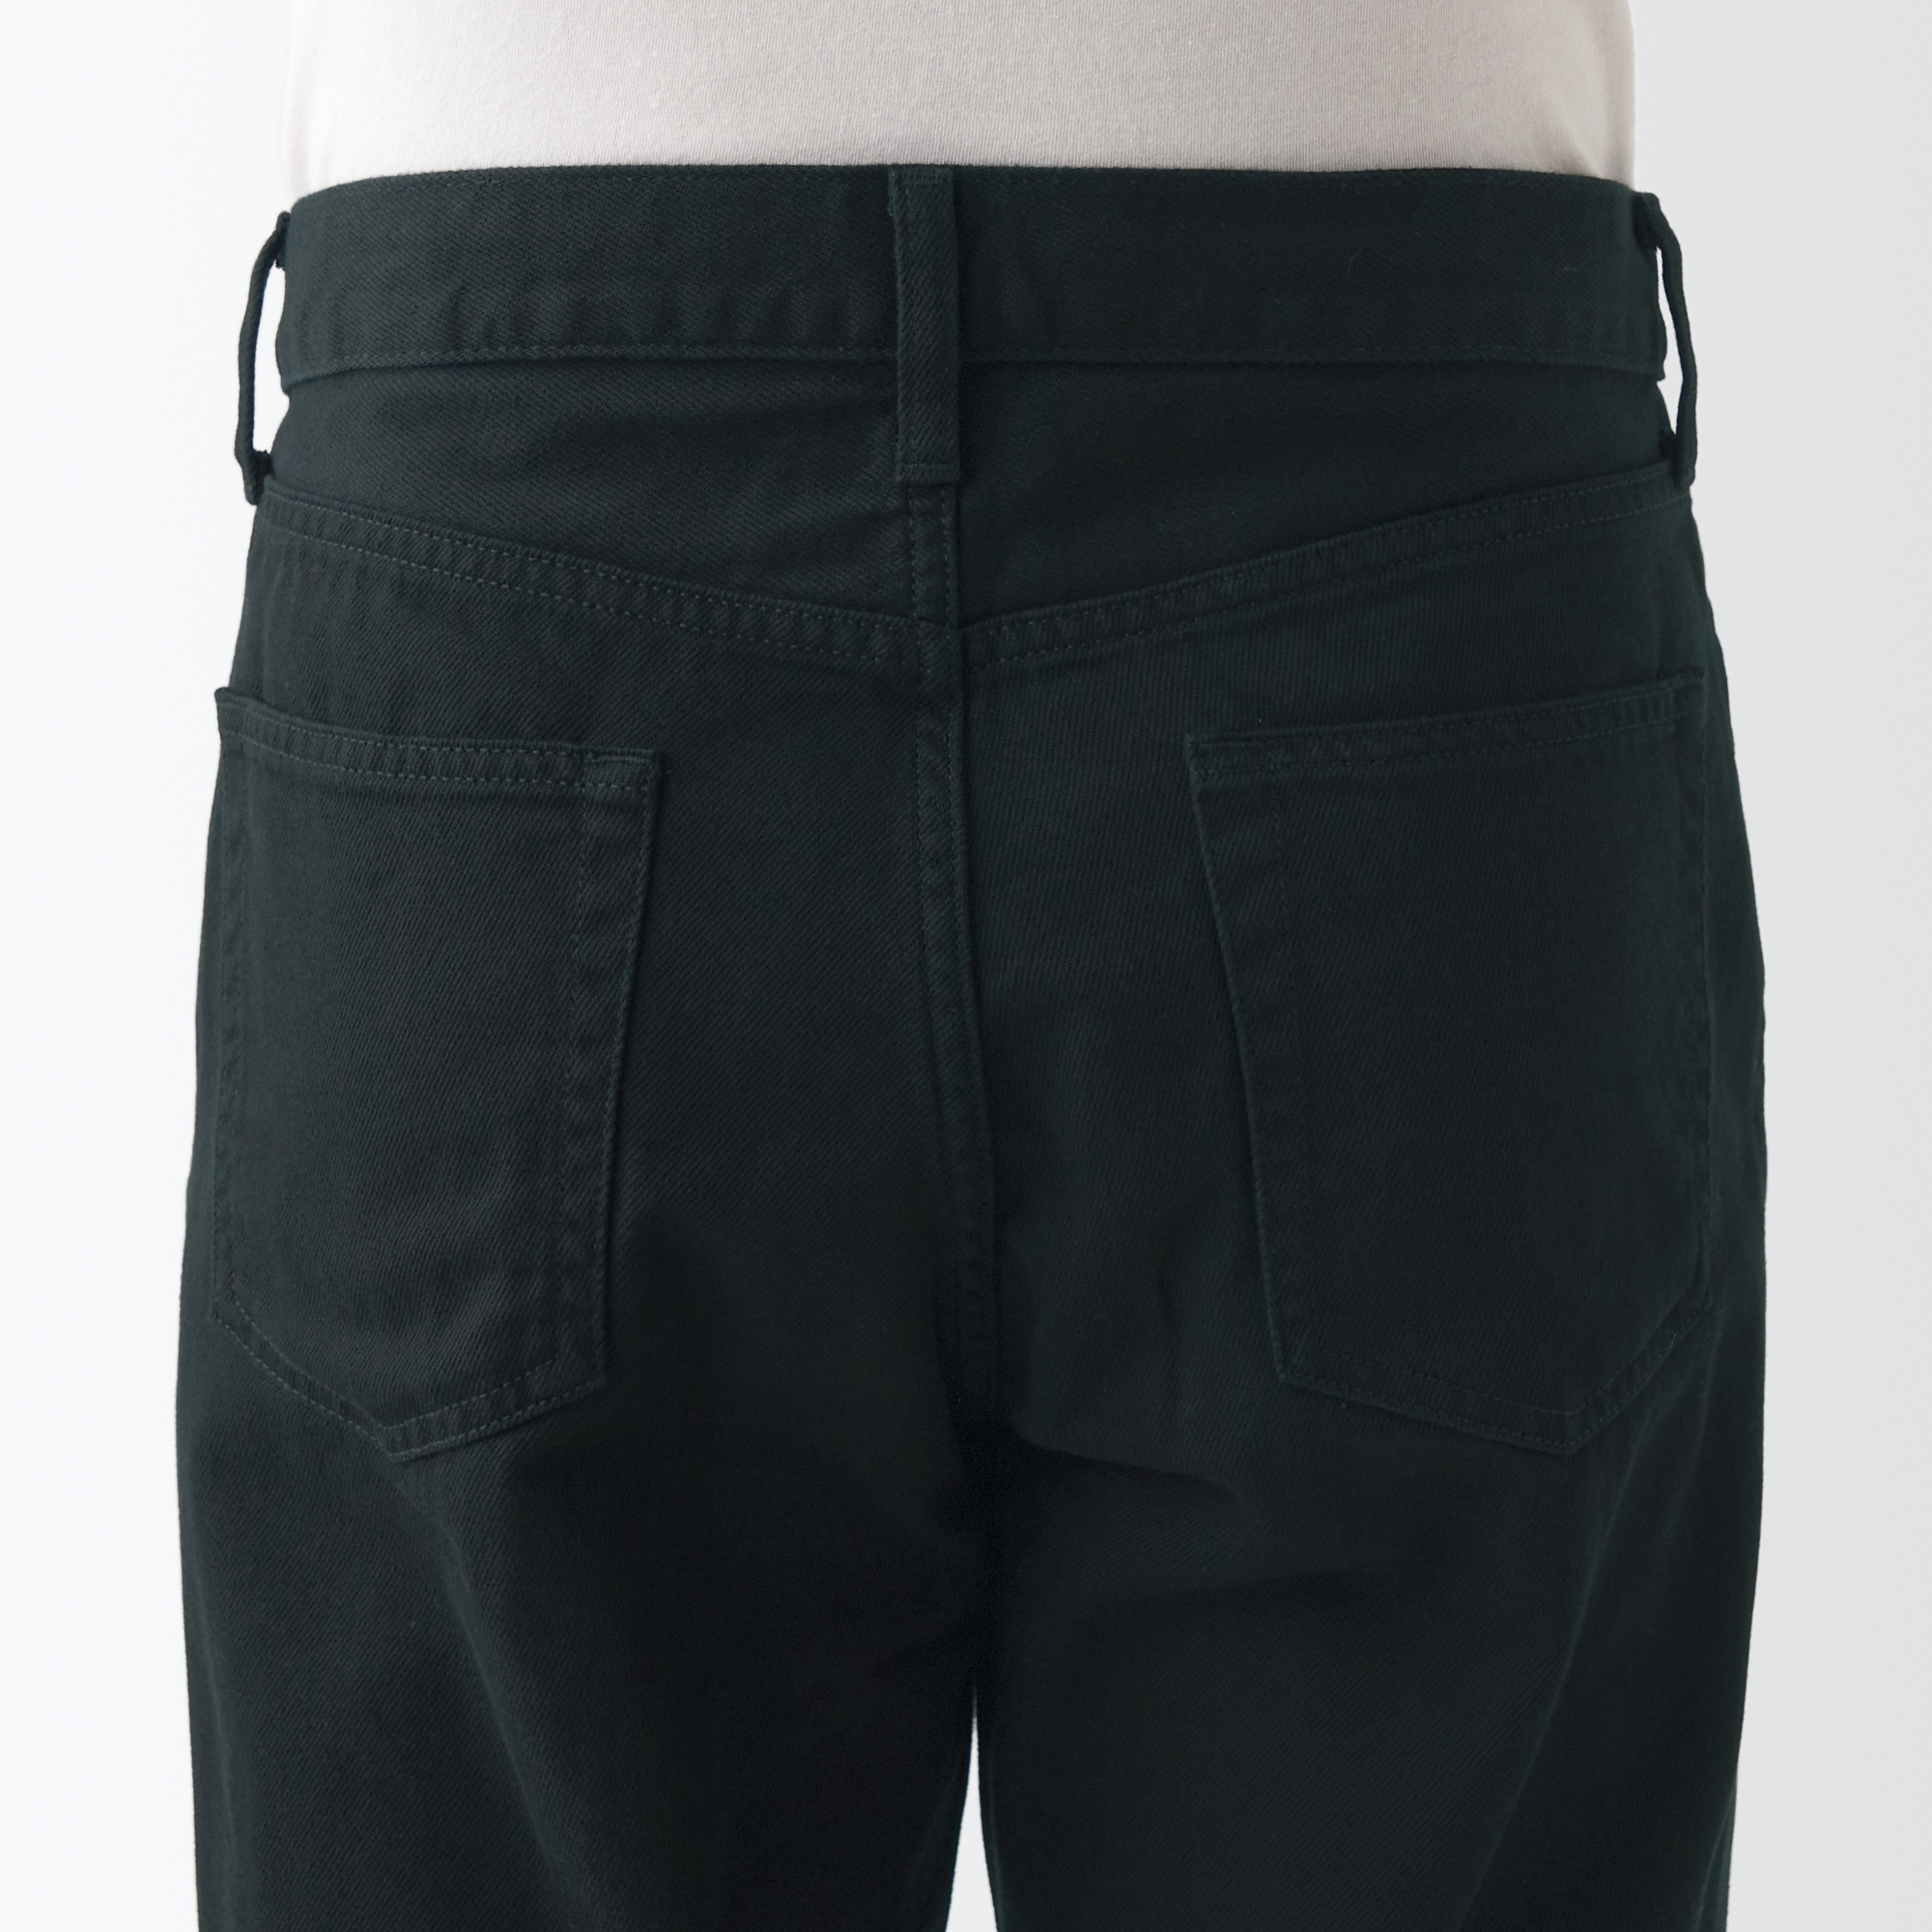 Swahili Regular Fit Pants at Rs 410/piece | महिला की फॉर्मल पैंट in Noida |  ID: 23436065197